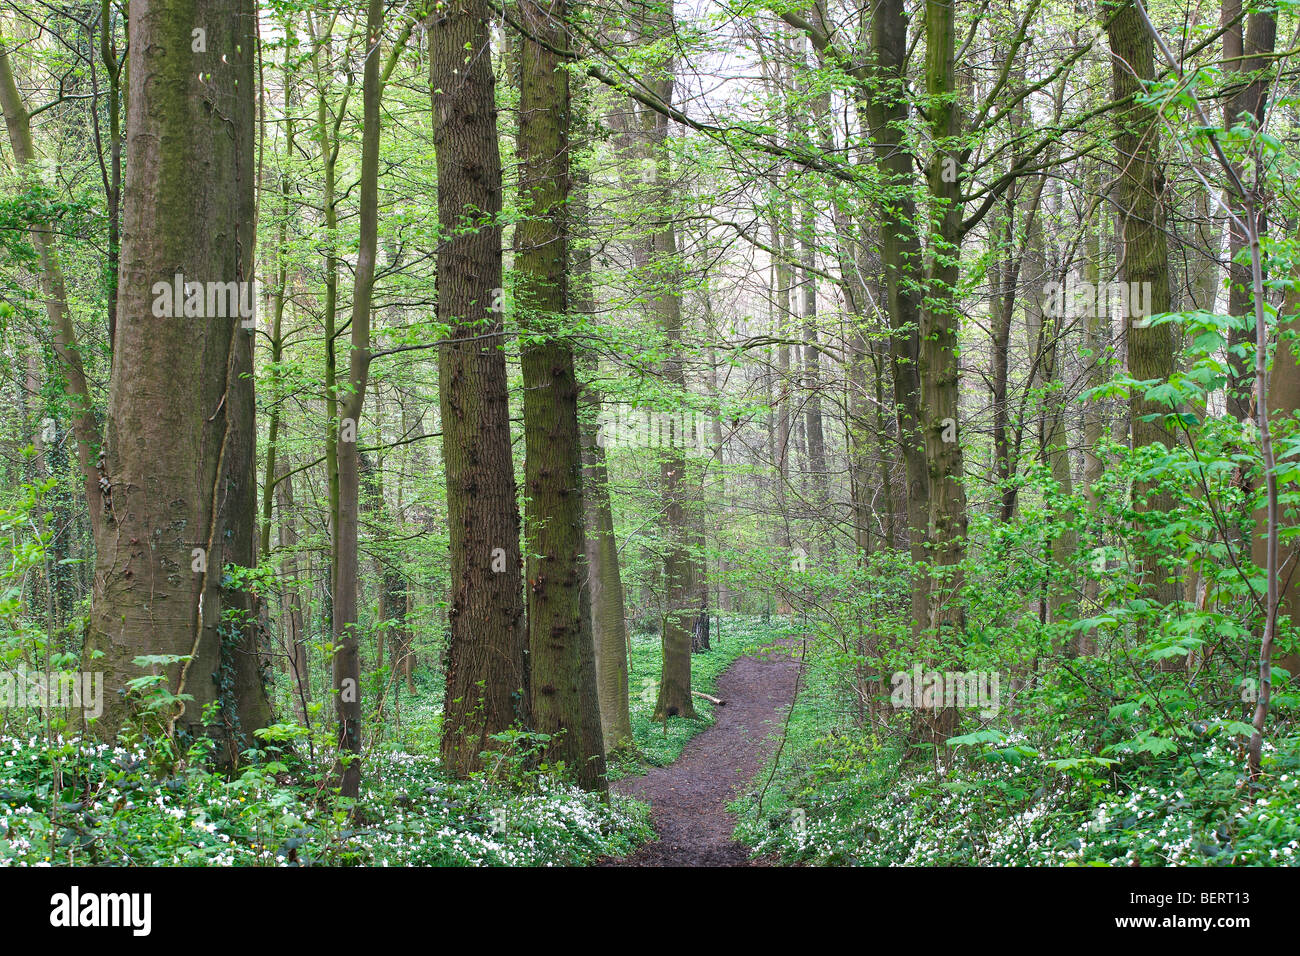 Naturschutzgebiet, Burreken, flämischen Ardennen, Belgien Stockfoto